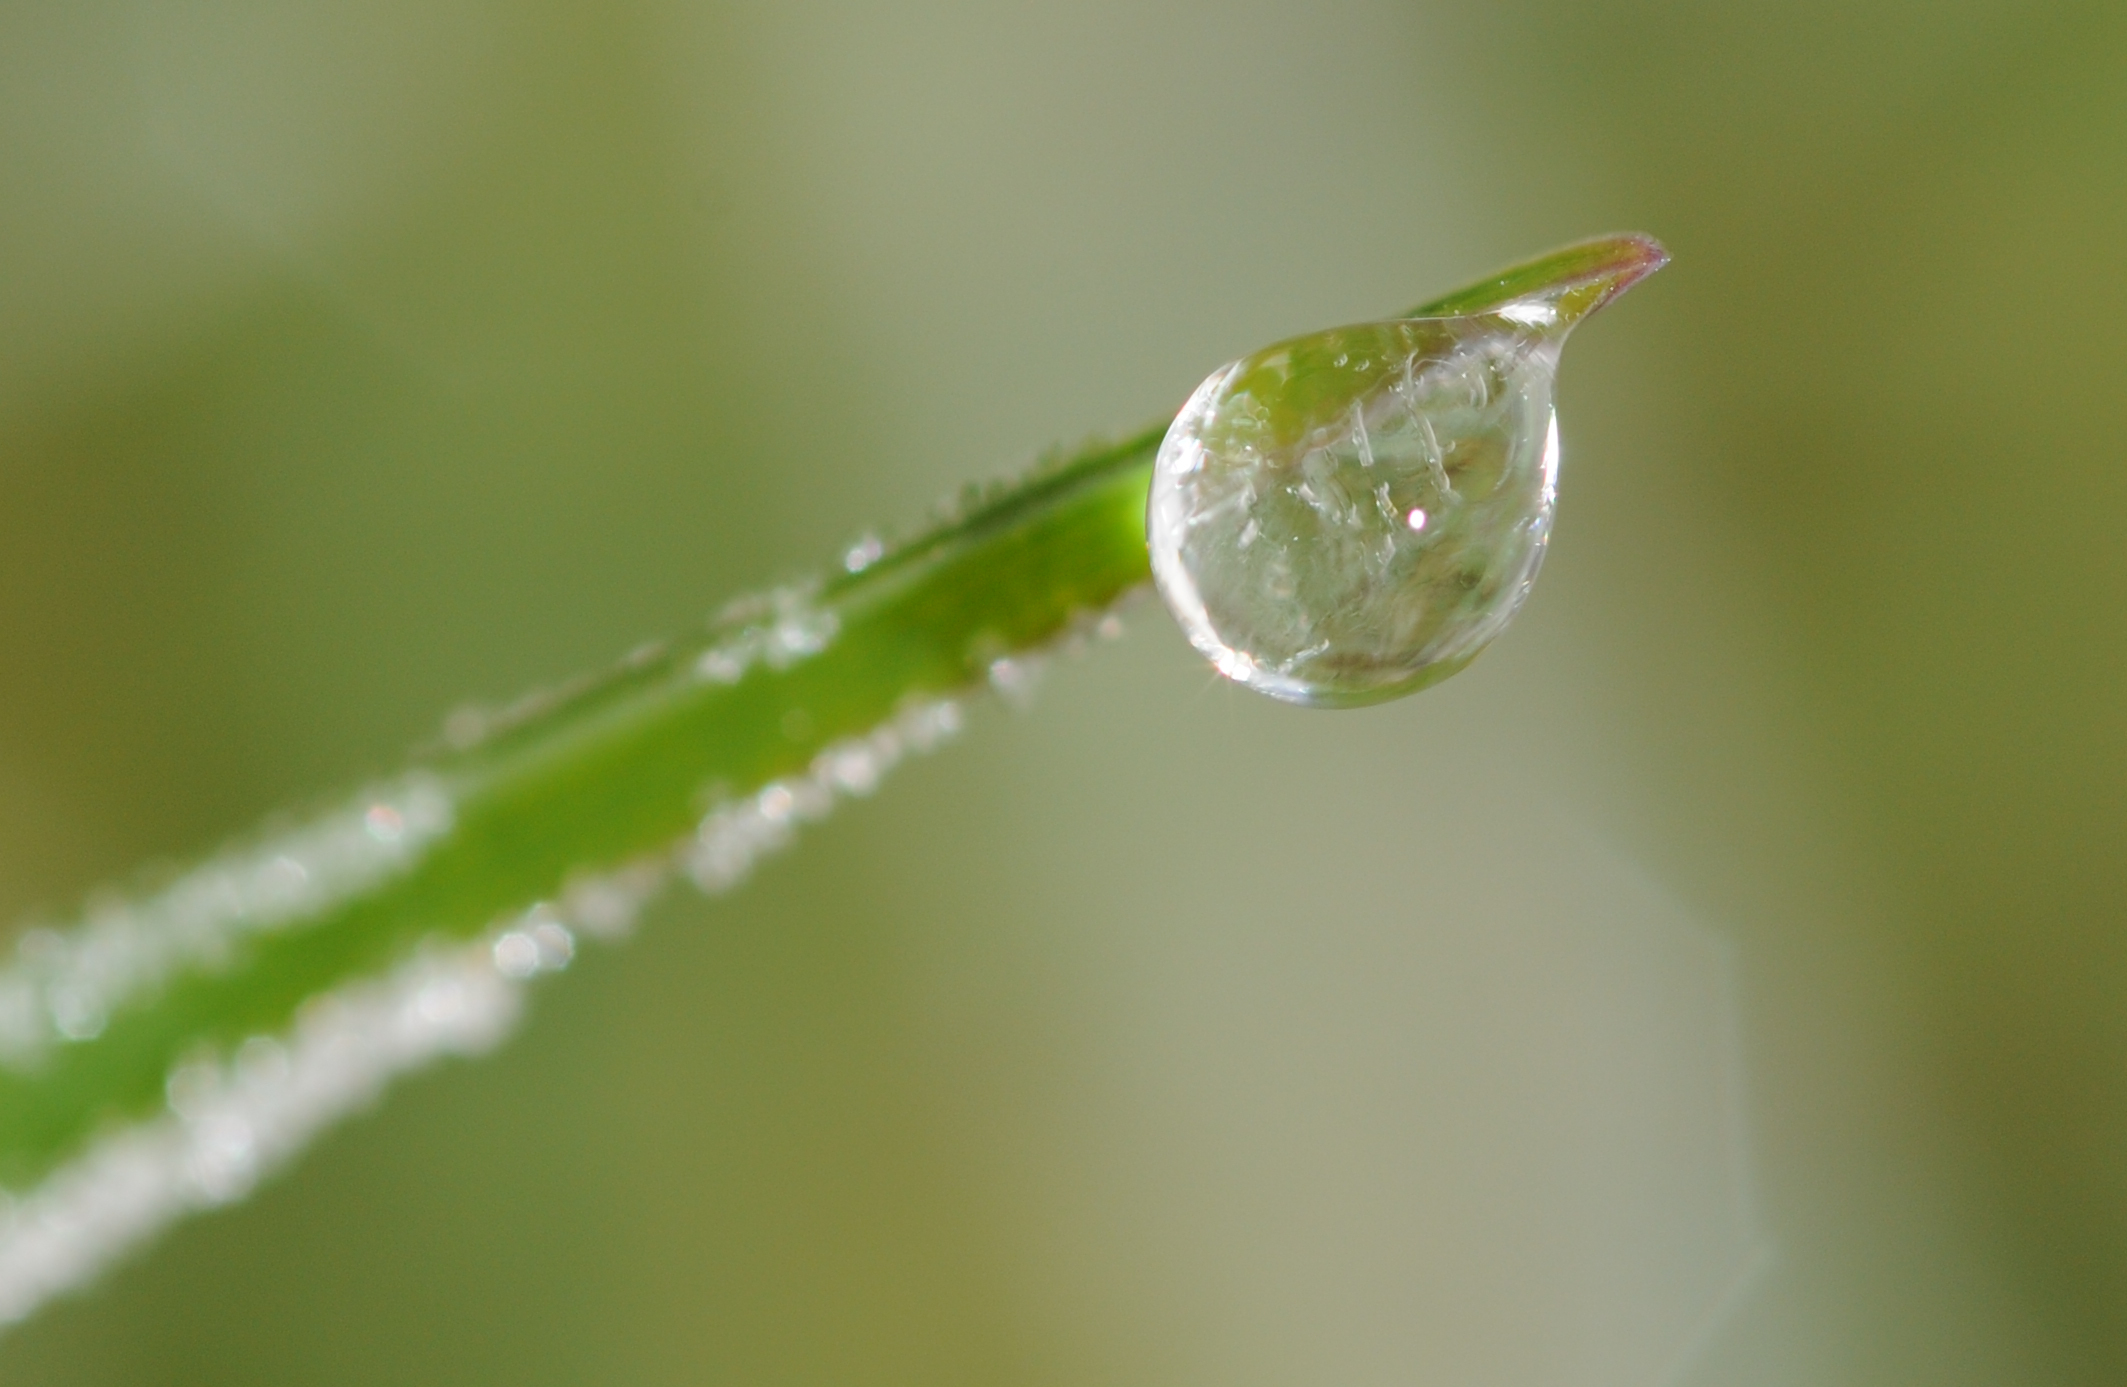 File:ComputerHotline - Iced Dew droplet (by) (1).jpg - Wikimedia Commons